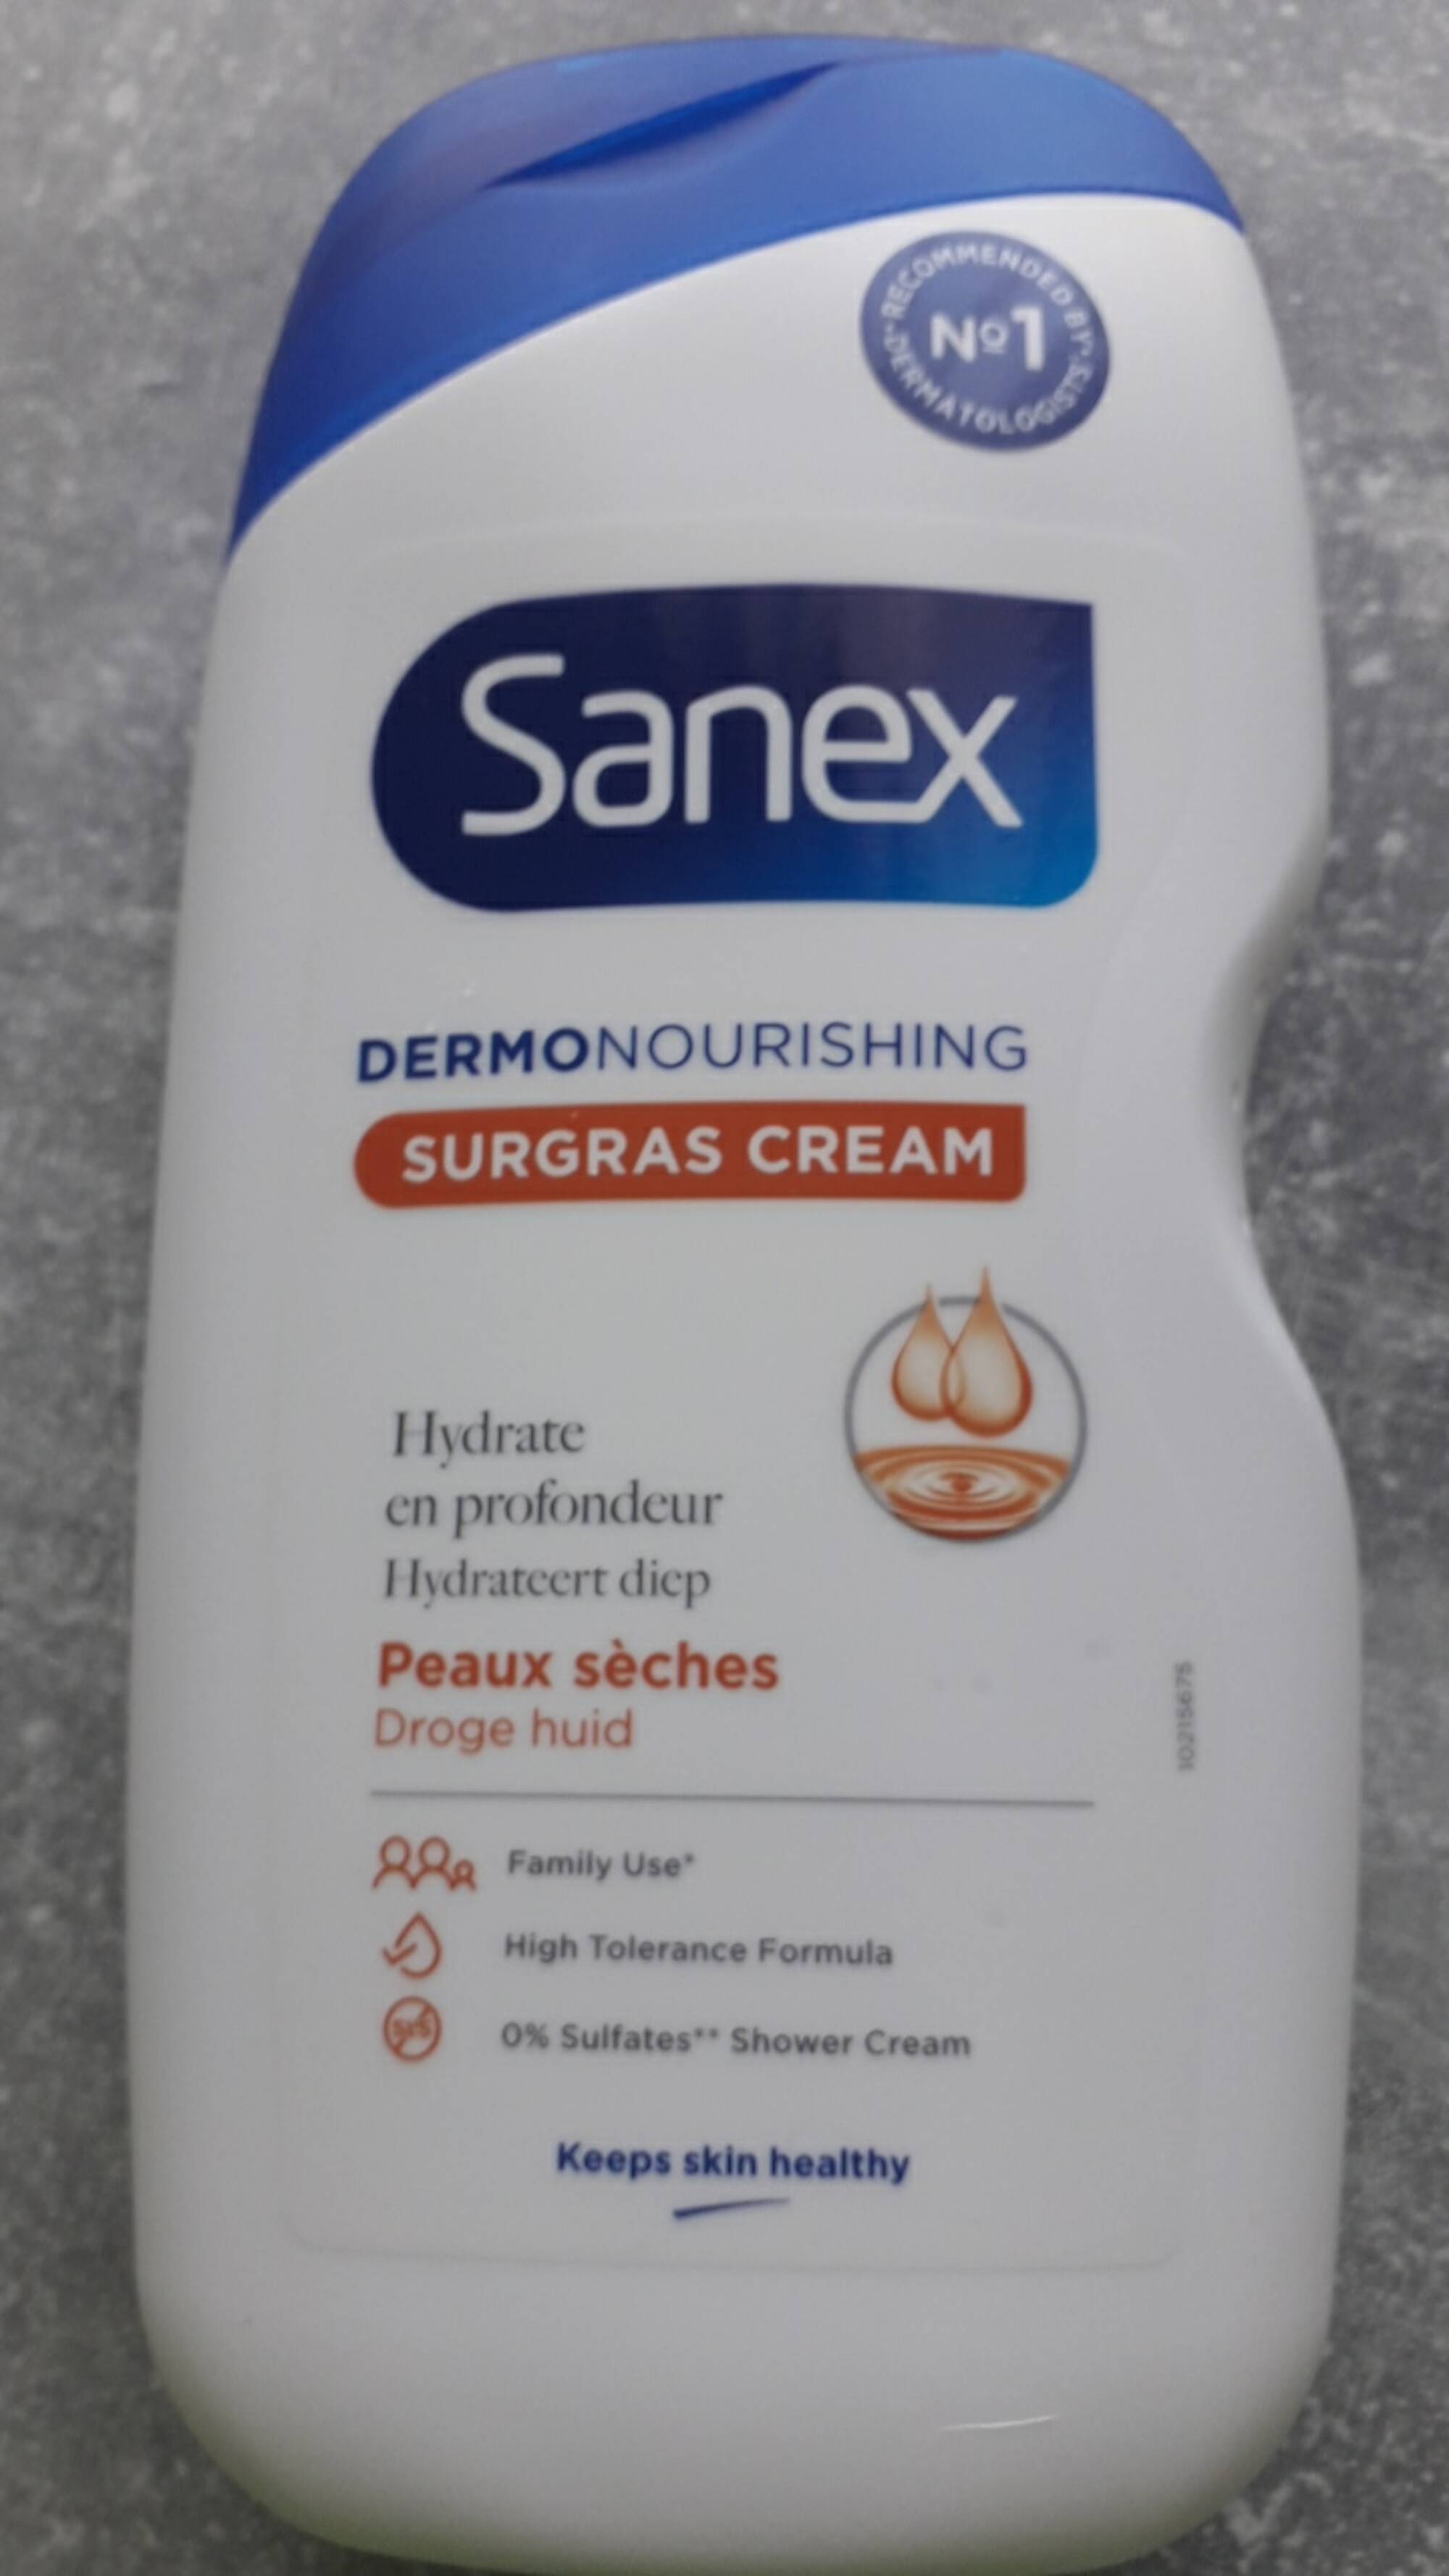 SANEX - Dermonourishing - Surgras cream